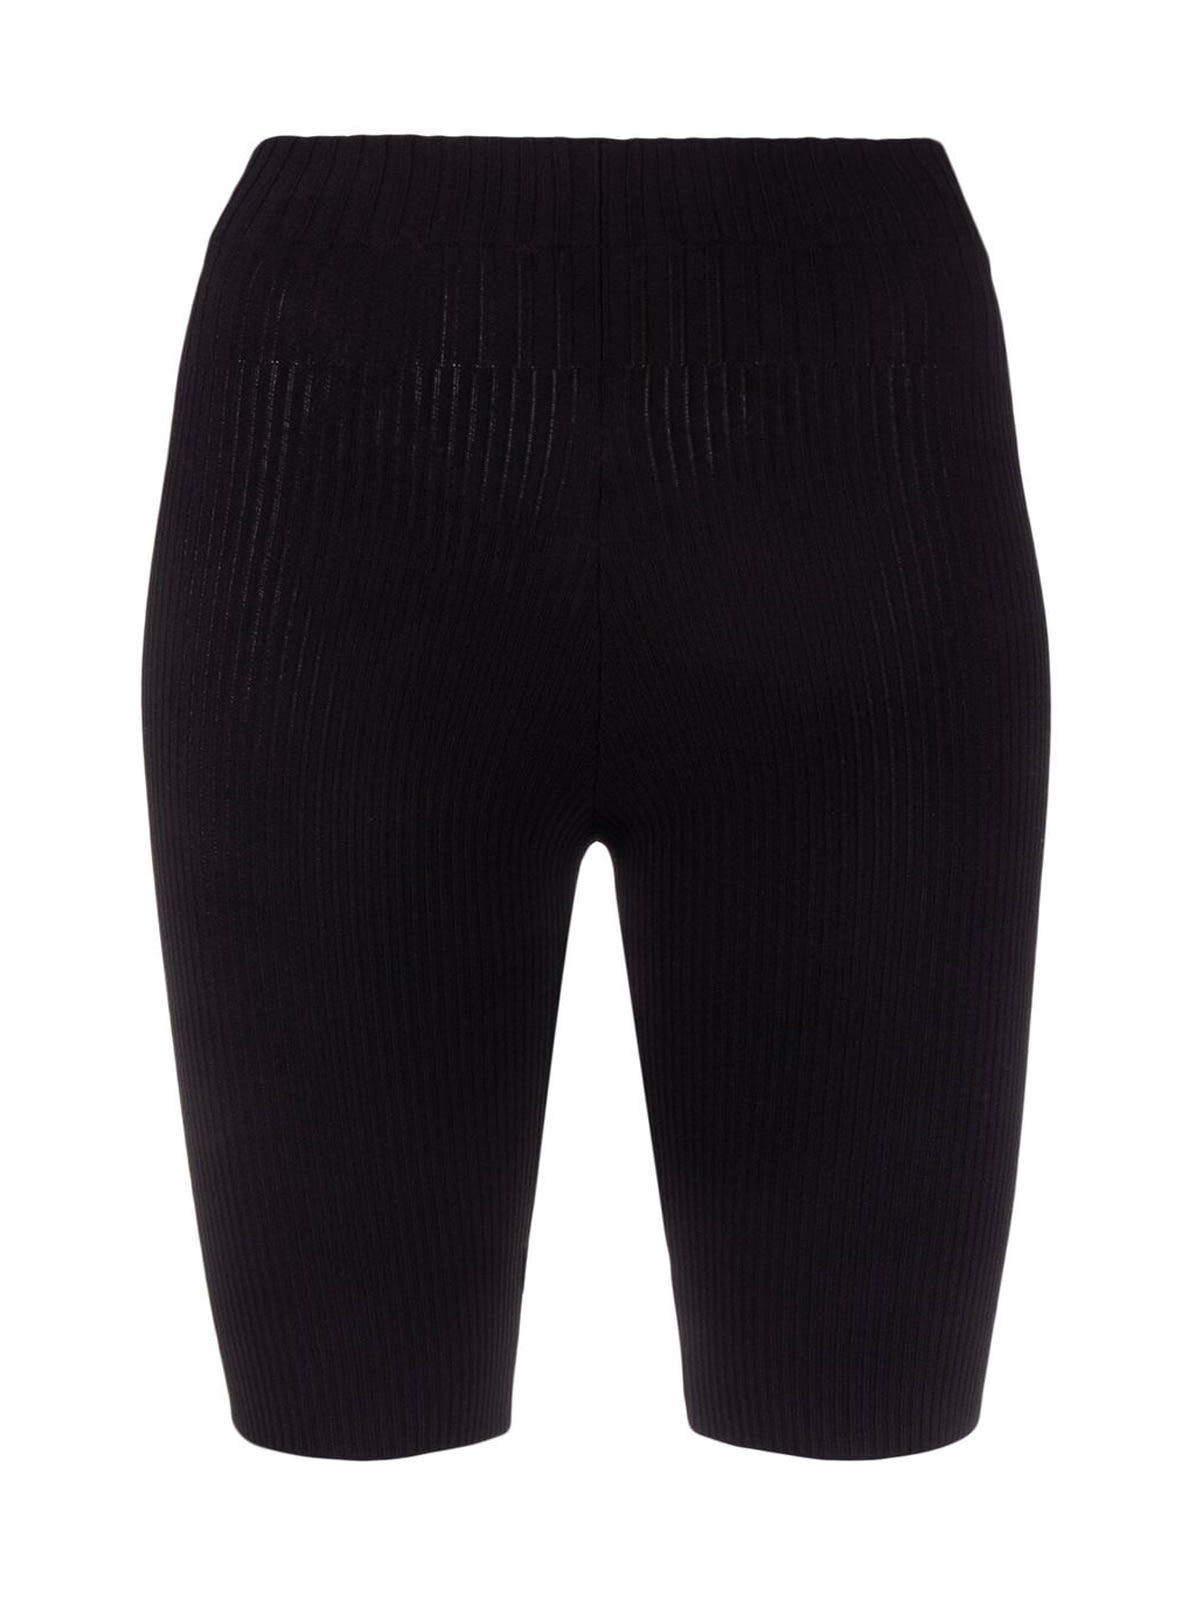 ANDREADAMO Ribbed-knit Mid Thigh Shorts High Waist in black